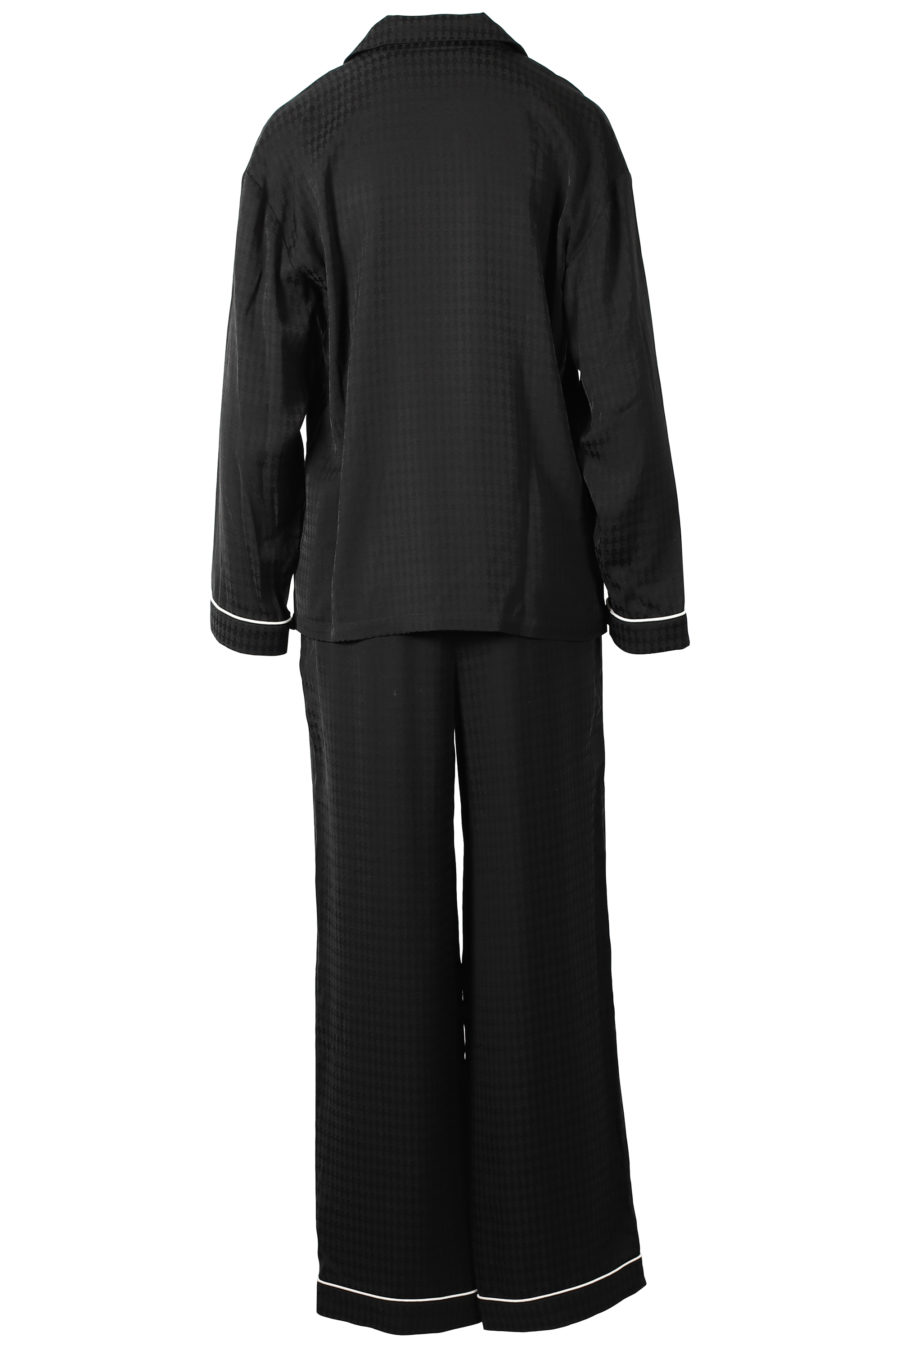 Set de regalo pijama de color negro Kameo - IMG 3188